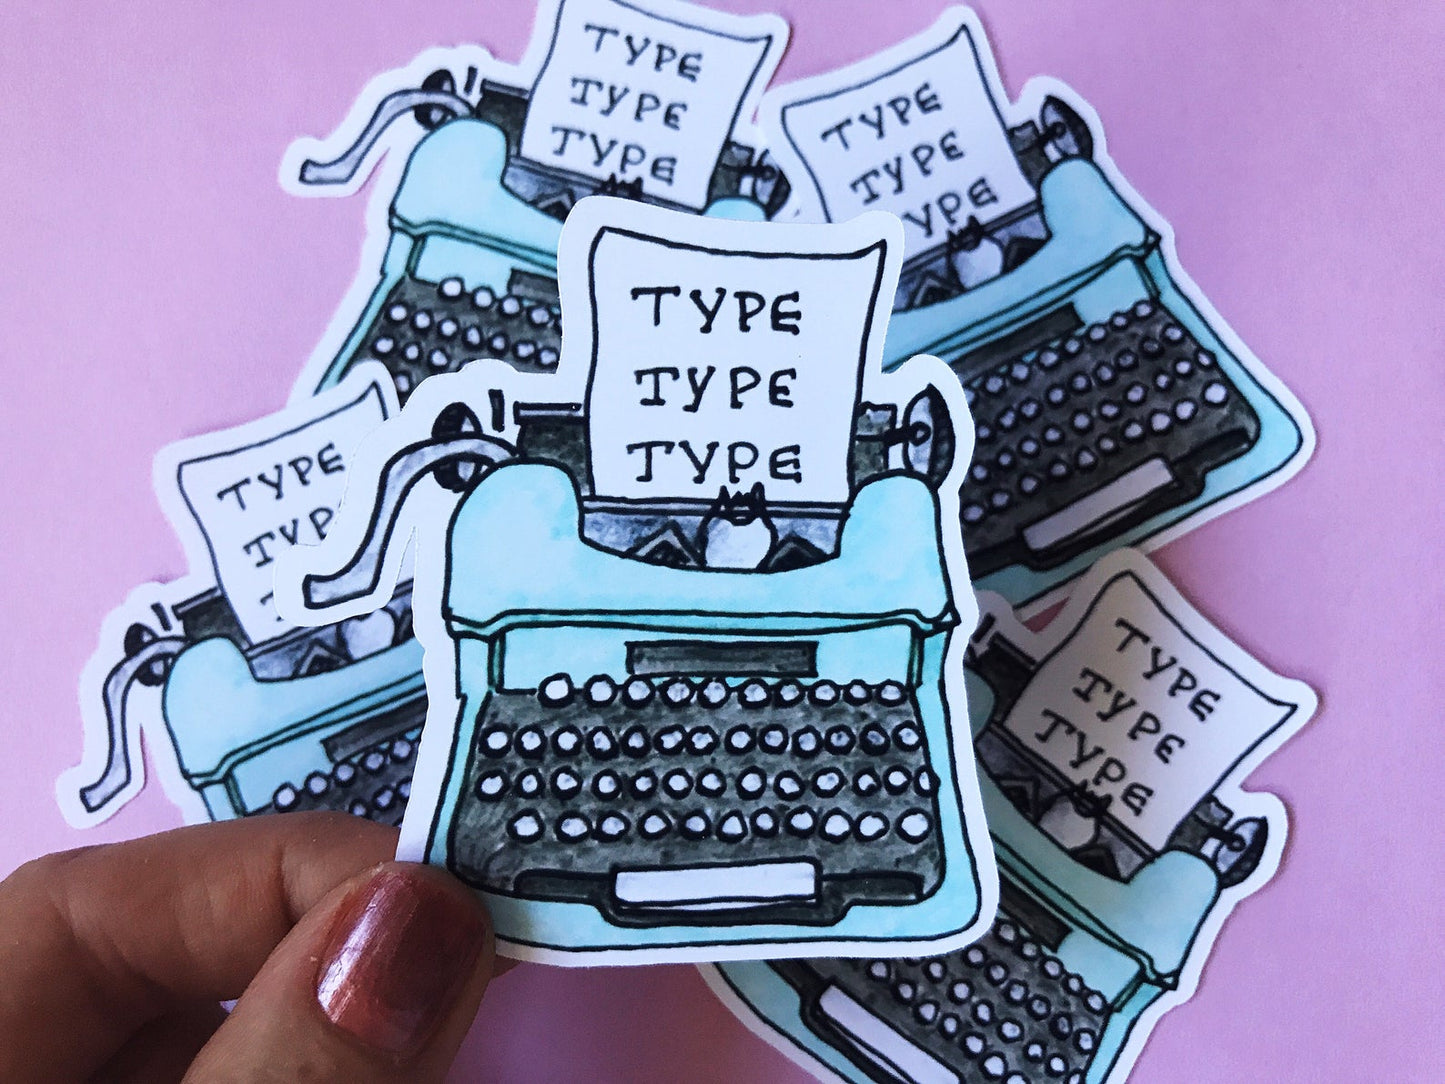 Type Type Typitiy Type Typewriter Die Cut Sticker